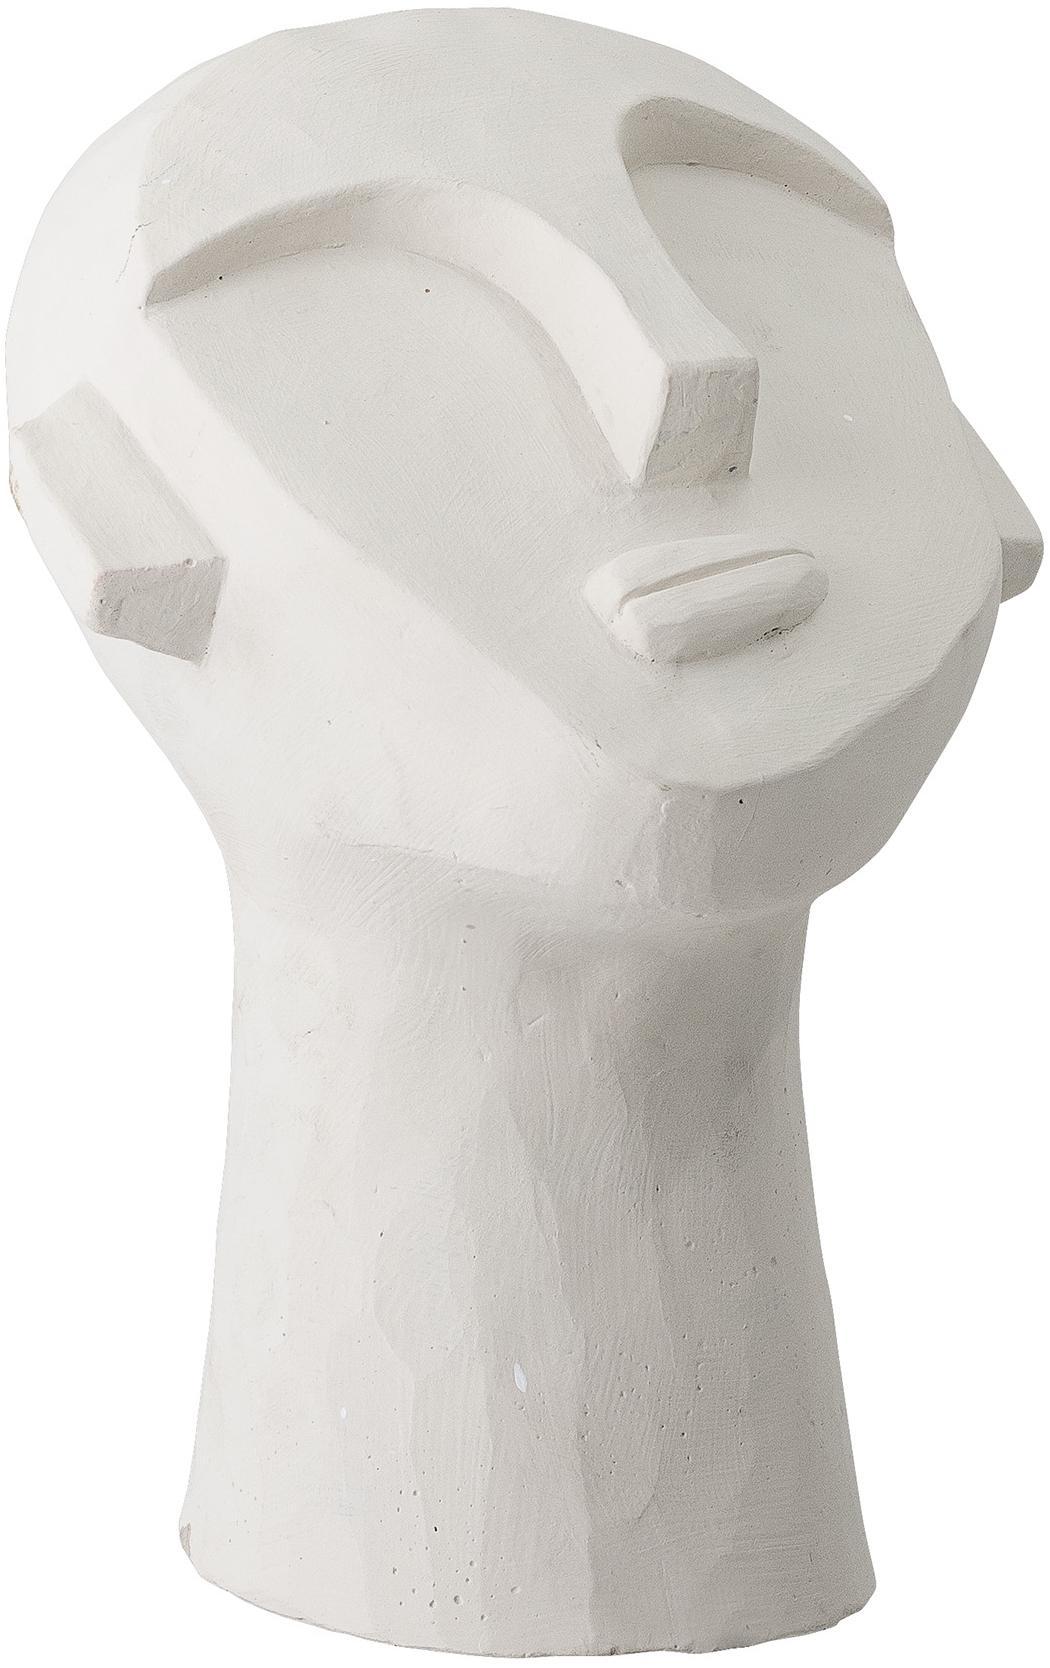 Deko-Objekt Man, Beton, bemalt, Weiß, 18 x 22 cm